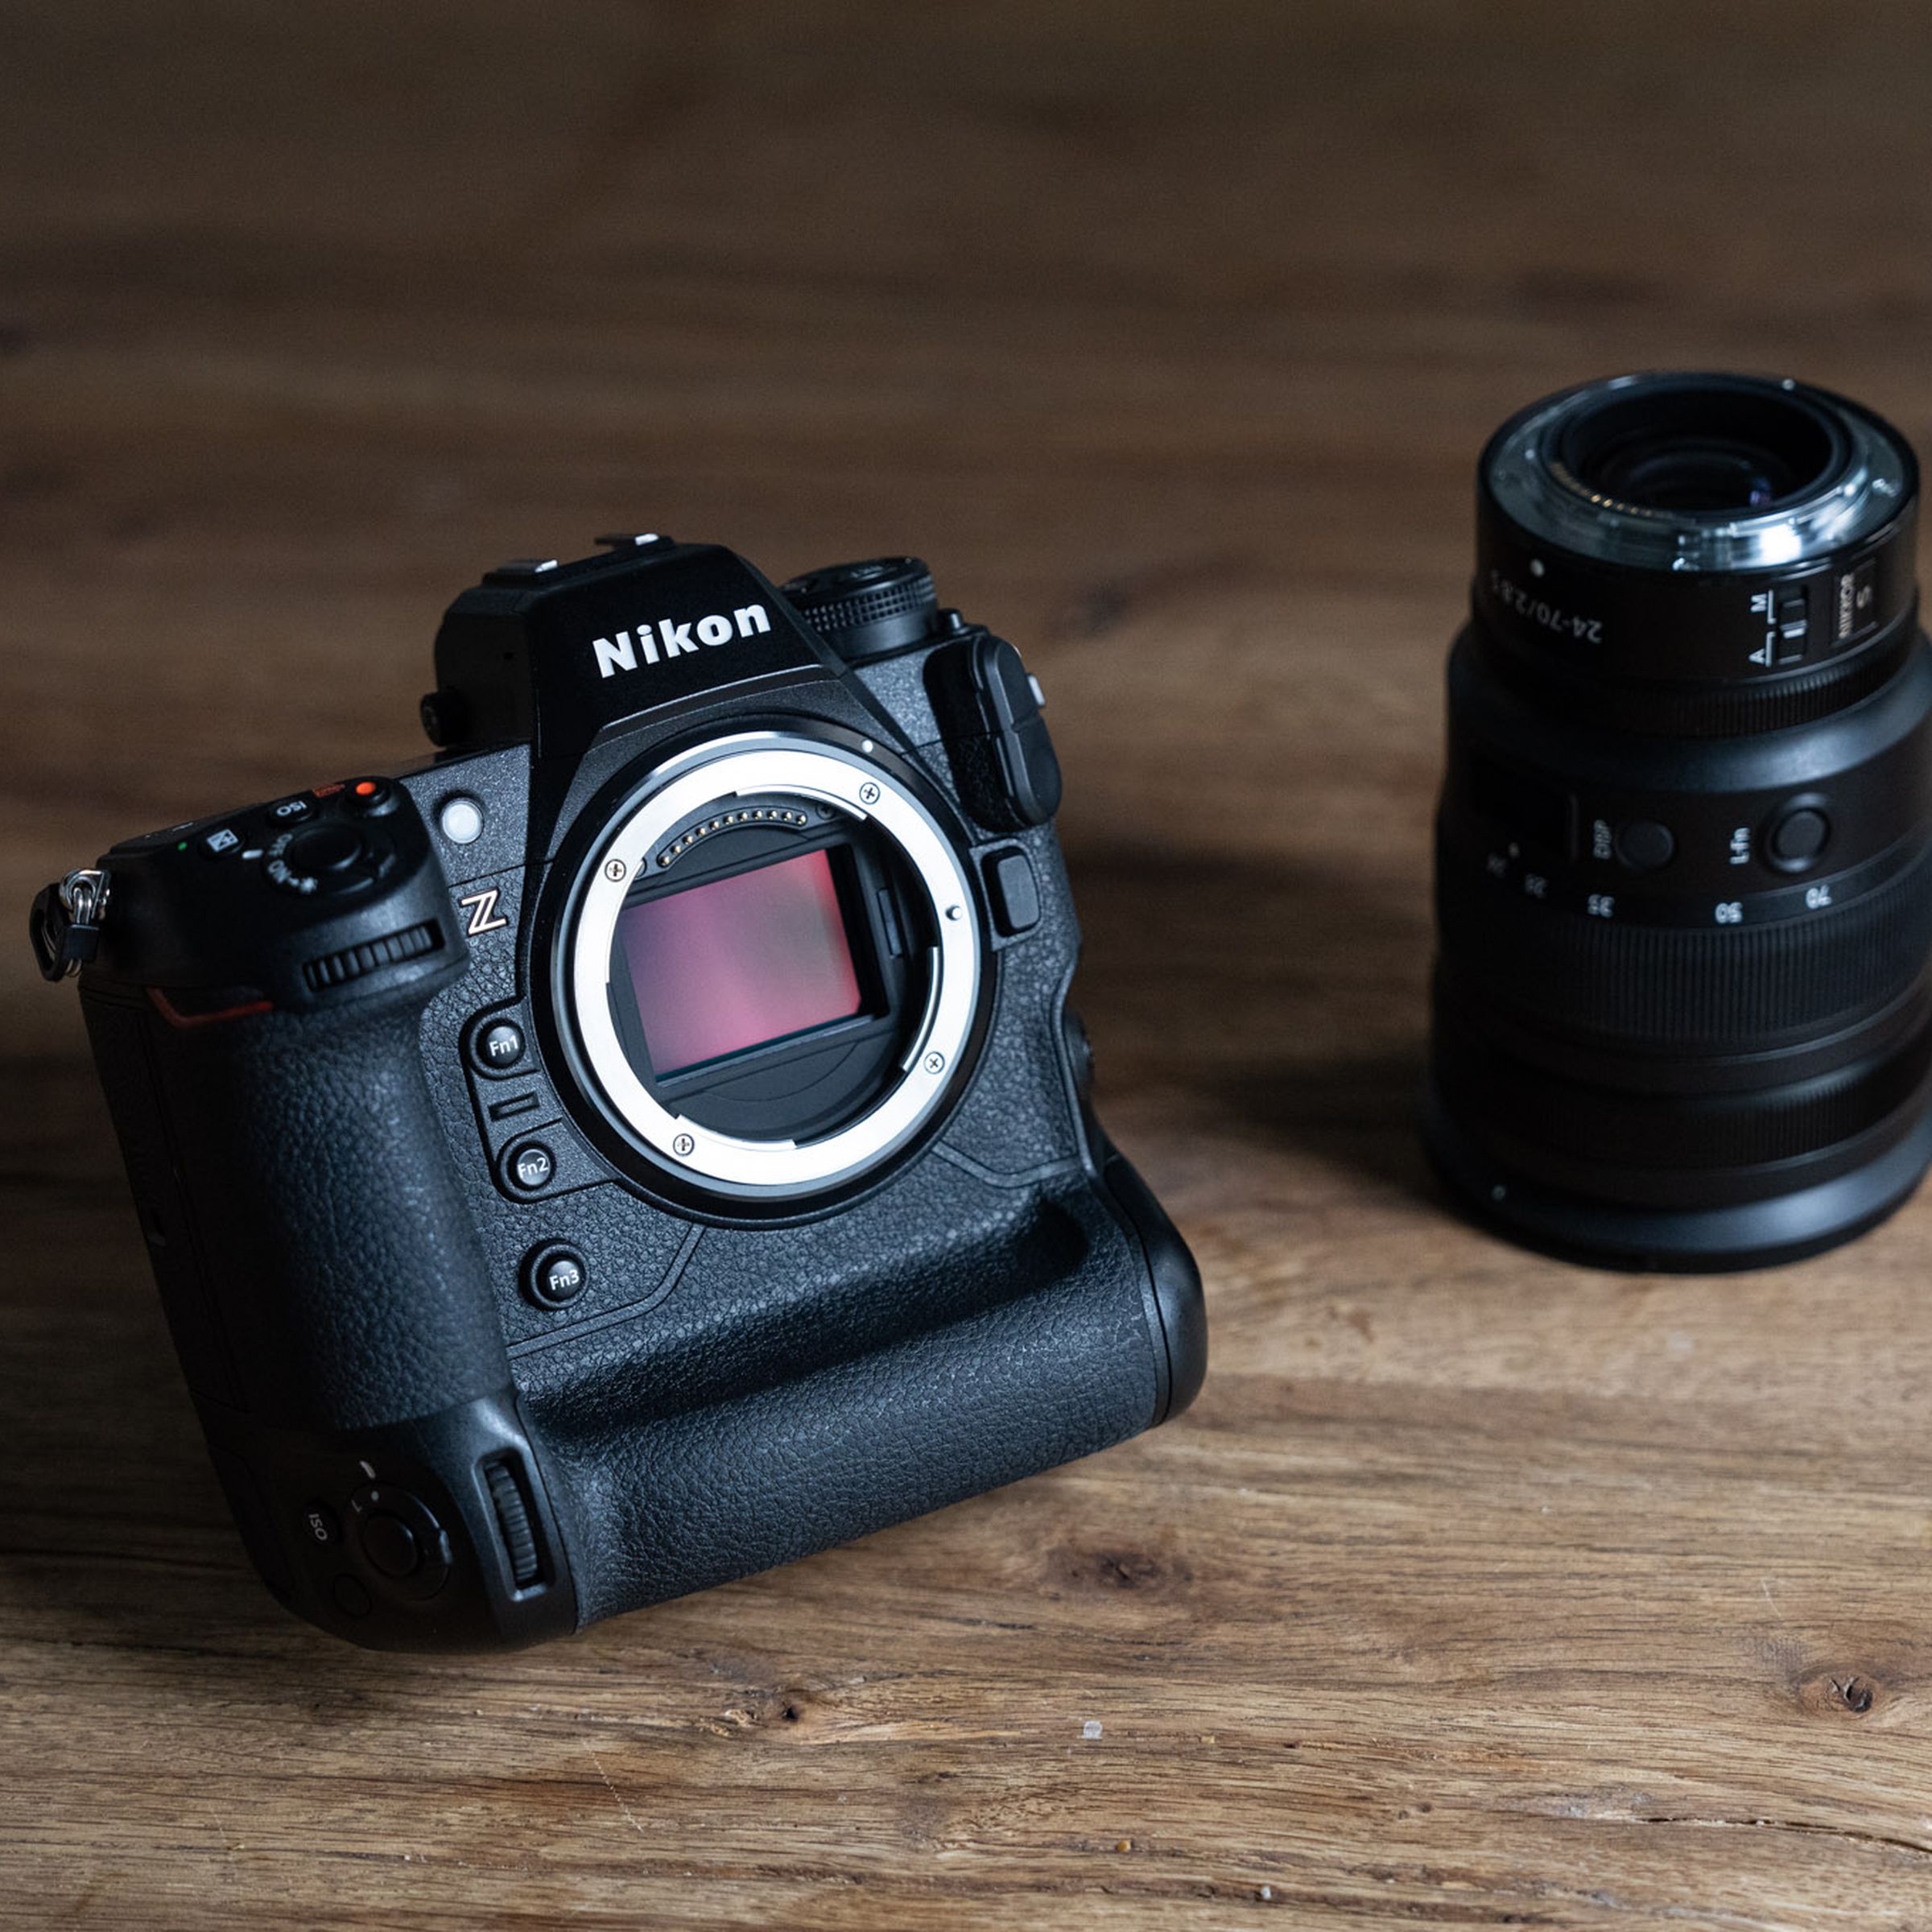 The Nikon Z9 has a new full-frame 45.7MP stacked CMOS sensor.